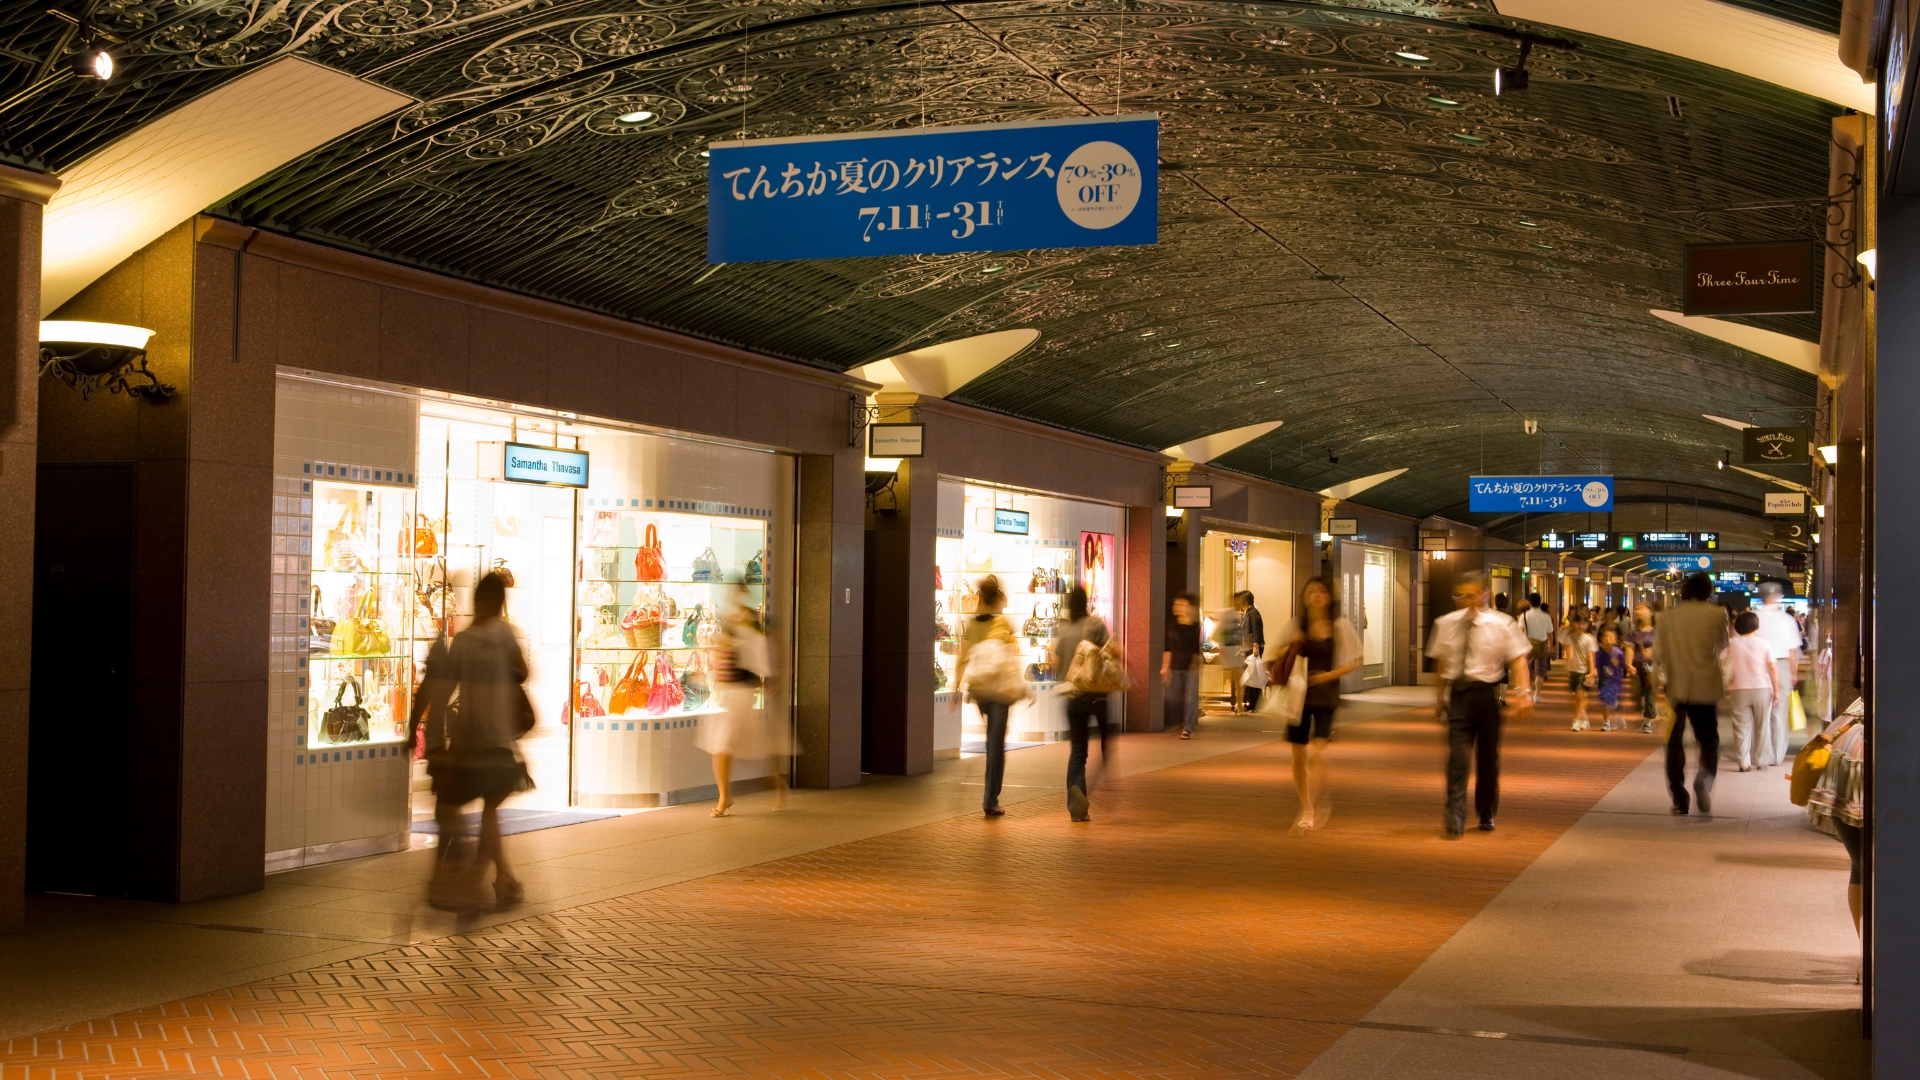 Tenjin underground shopping mall in Fukuoka